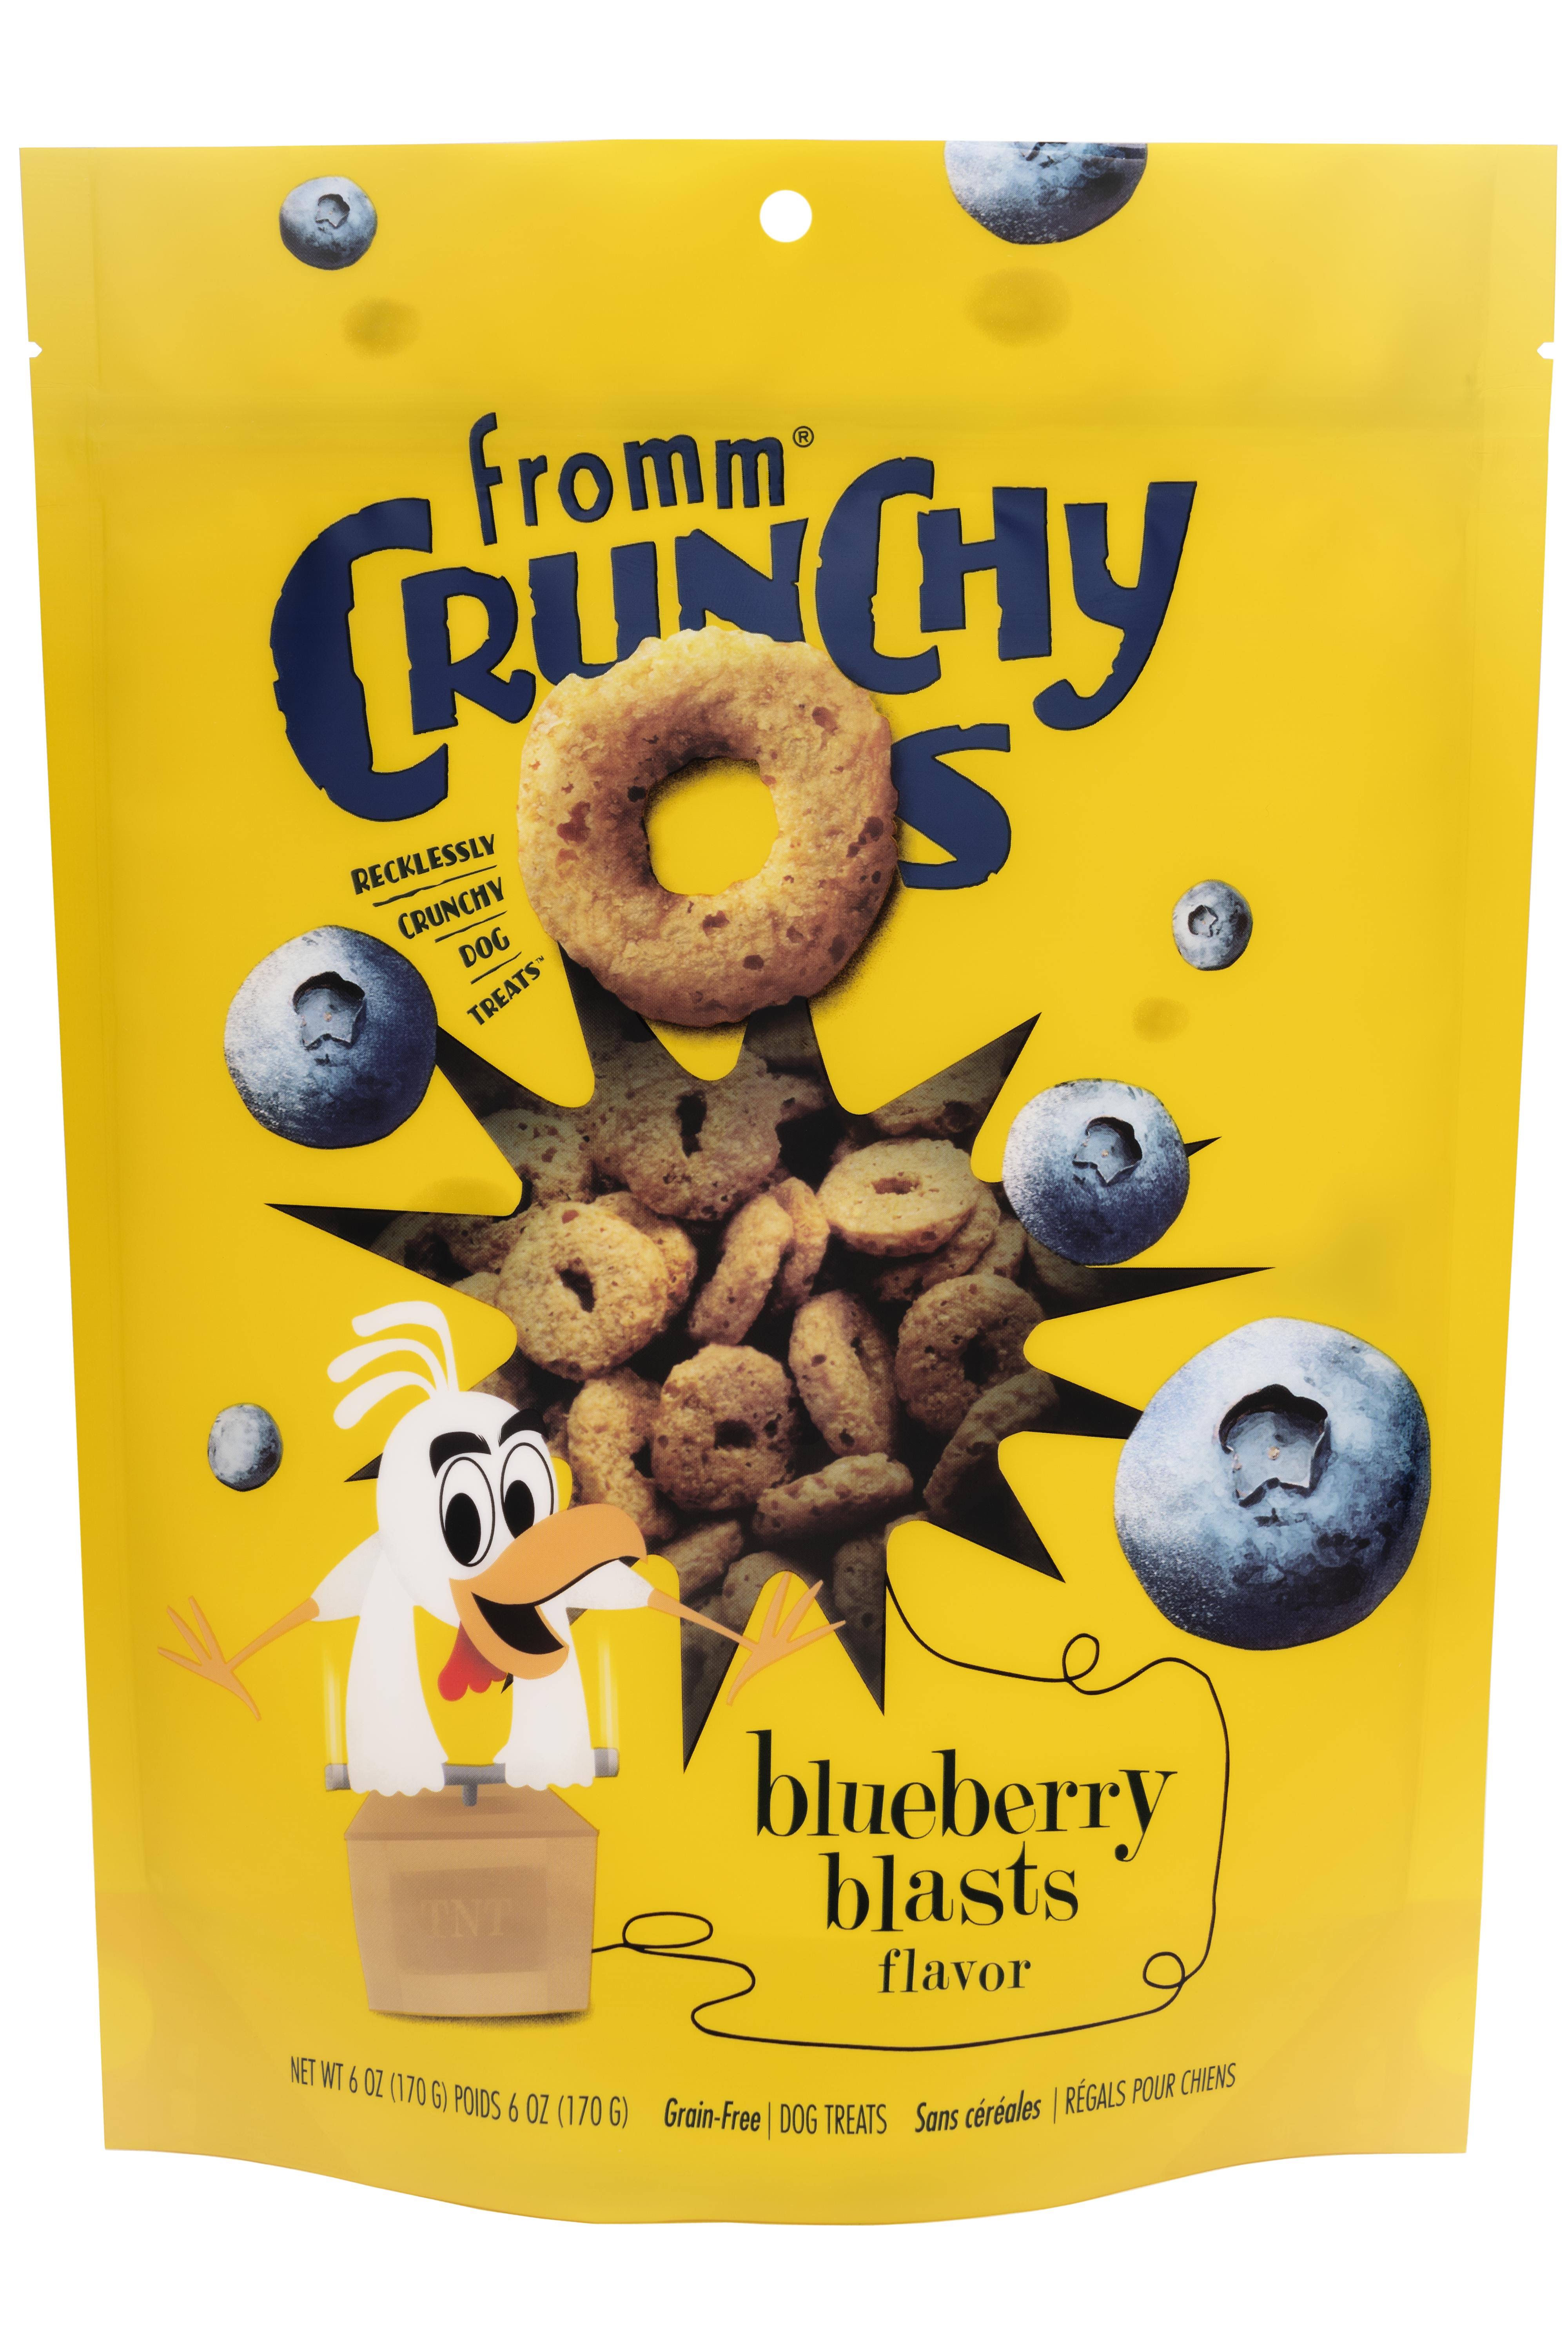 Fromm Crunchy O's Blueberry Blasts Flavor Dog Treats 26 oz